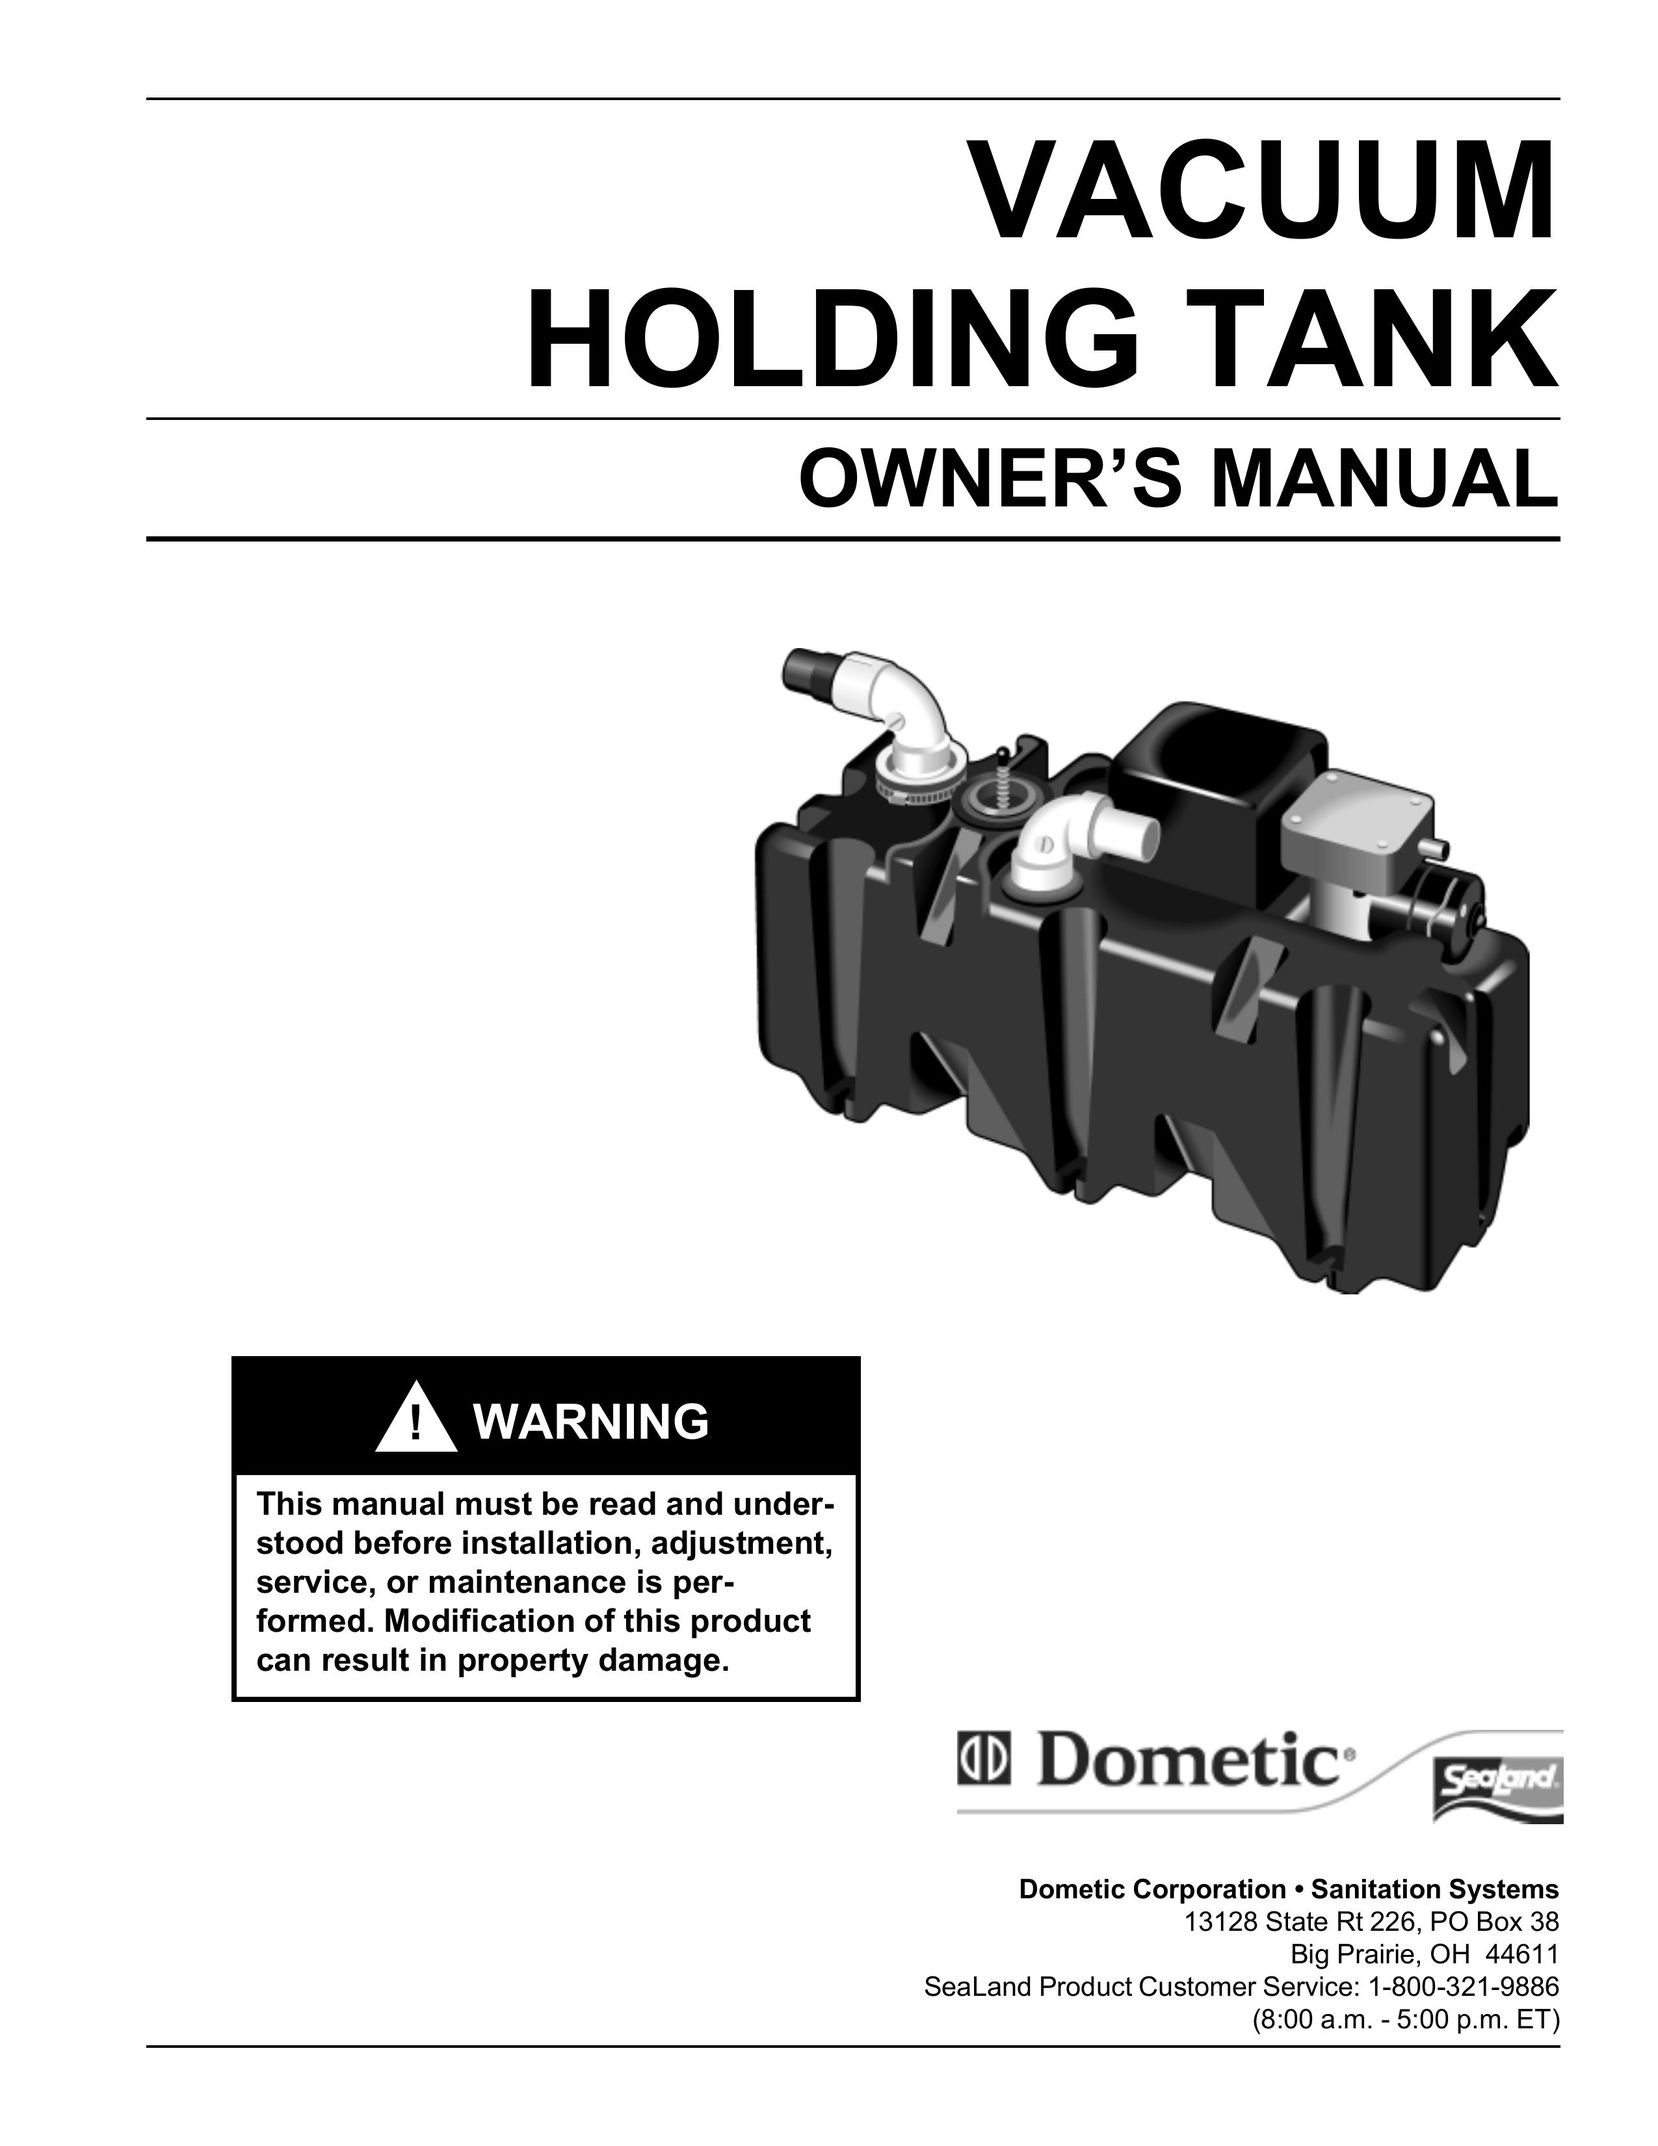 SeaLand VACUUM HOLDING TANK Vacuum Cleaner User Manual